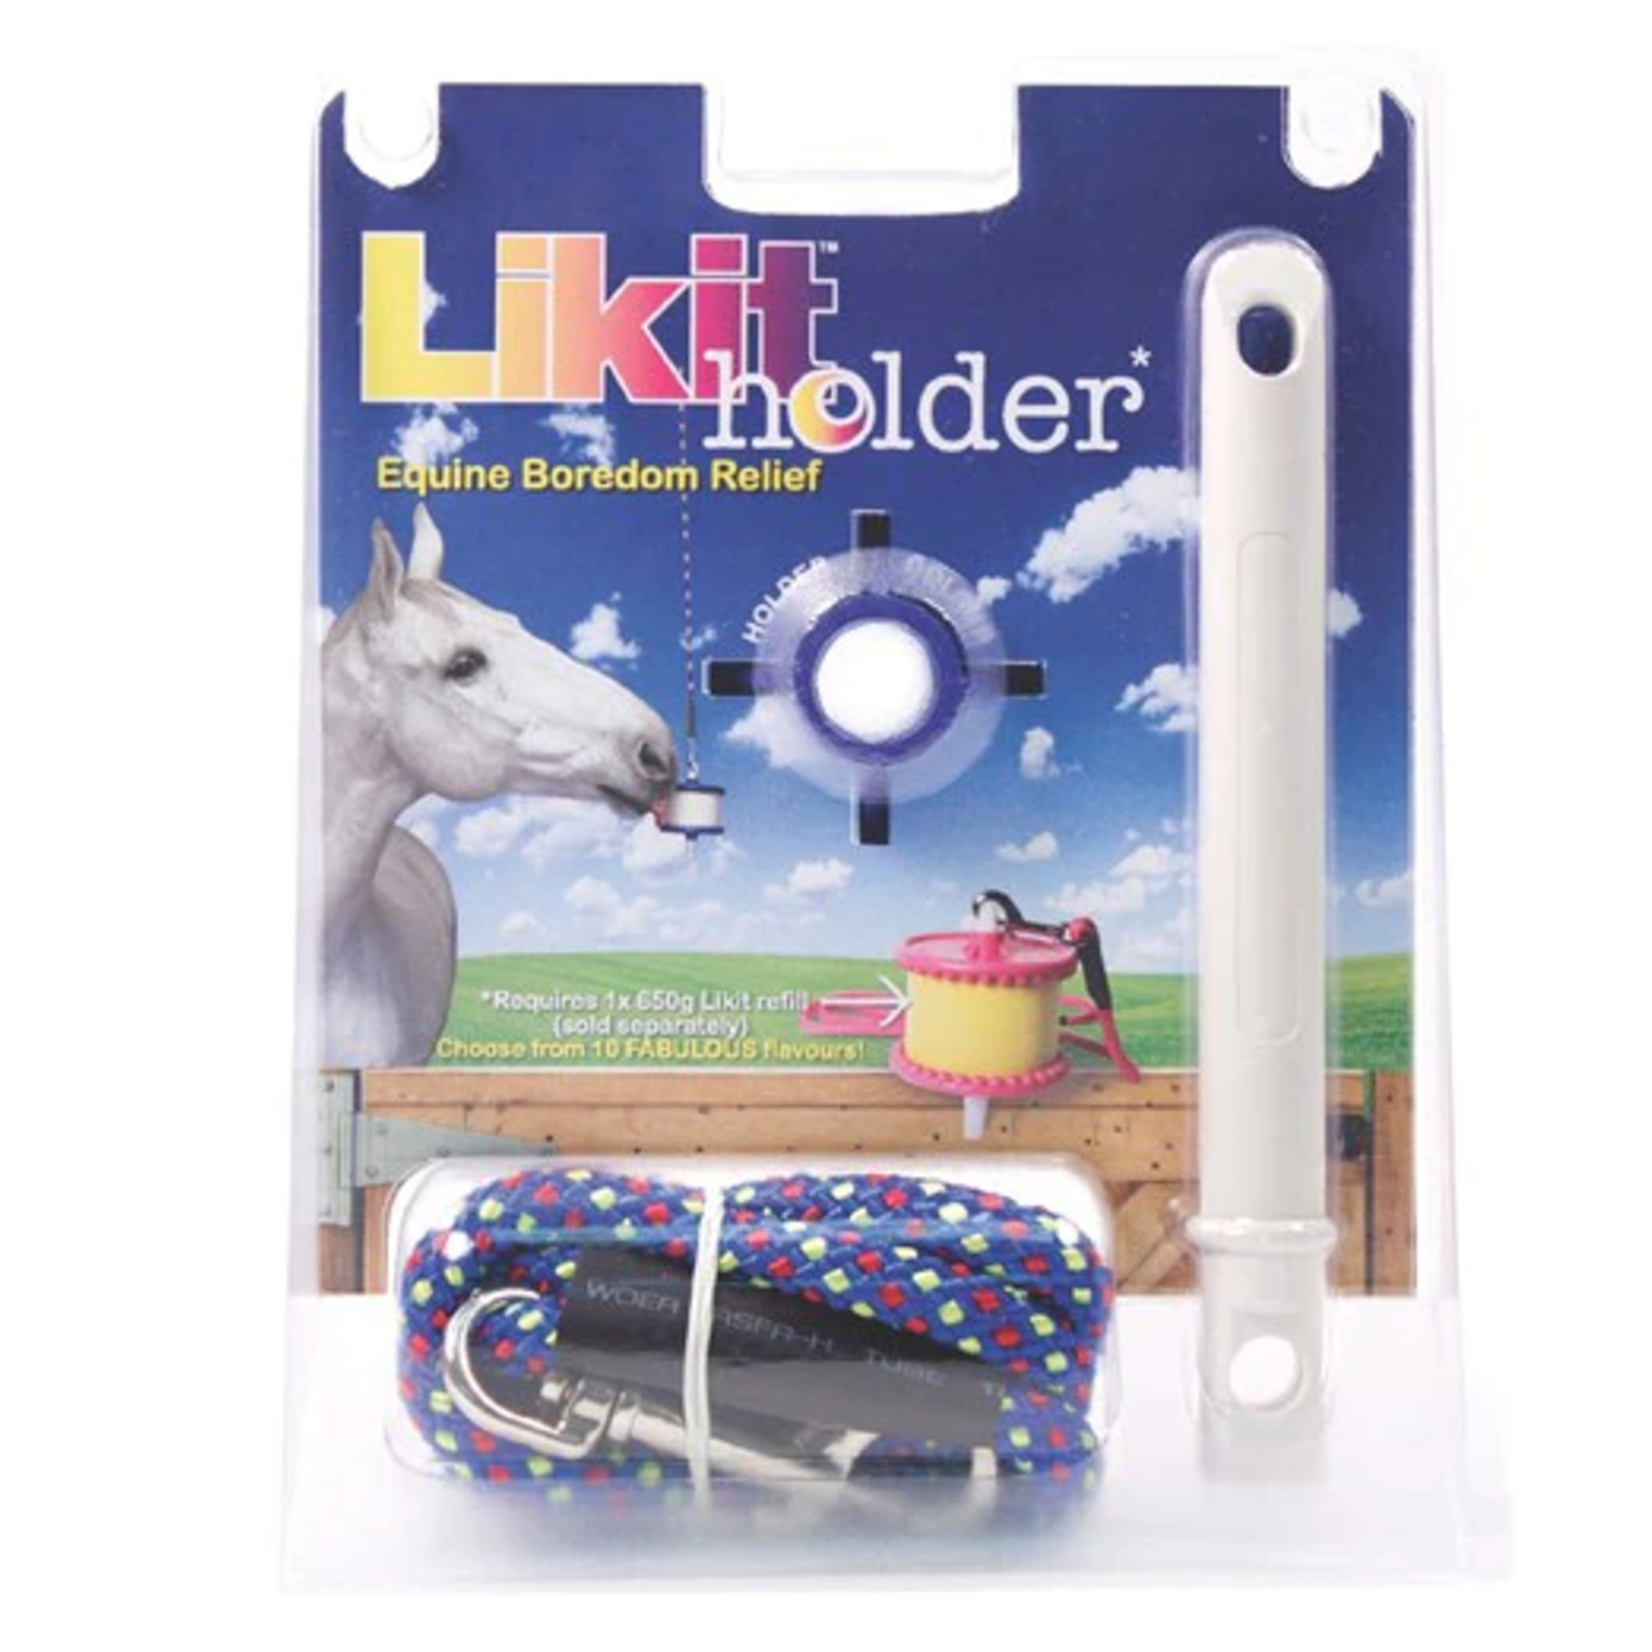 Likit 16815 Likit Holder Equine Boredom Relief Treat Holder - Requires Original Likit (LG)